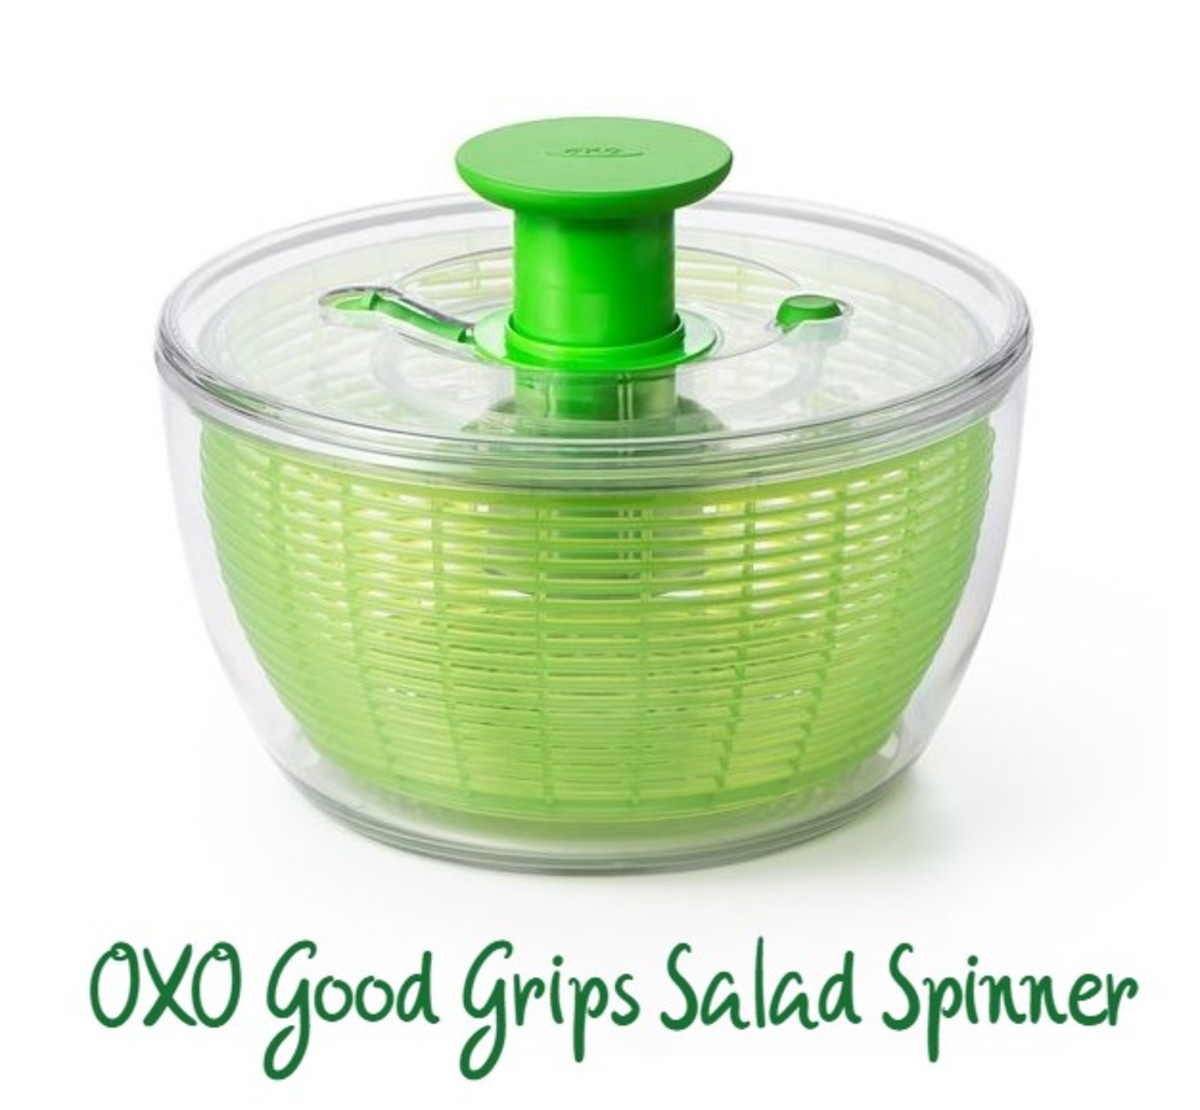 Oxo Good Grips Salad Spinner 